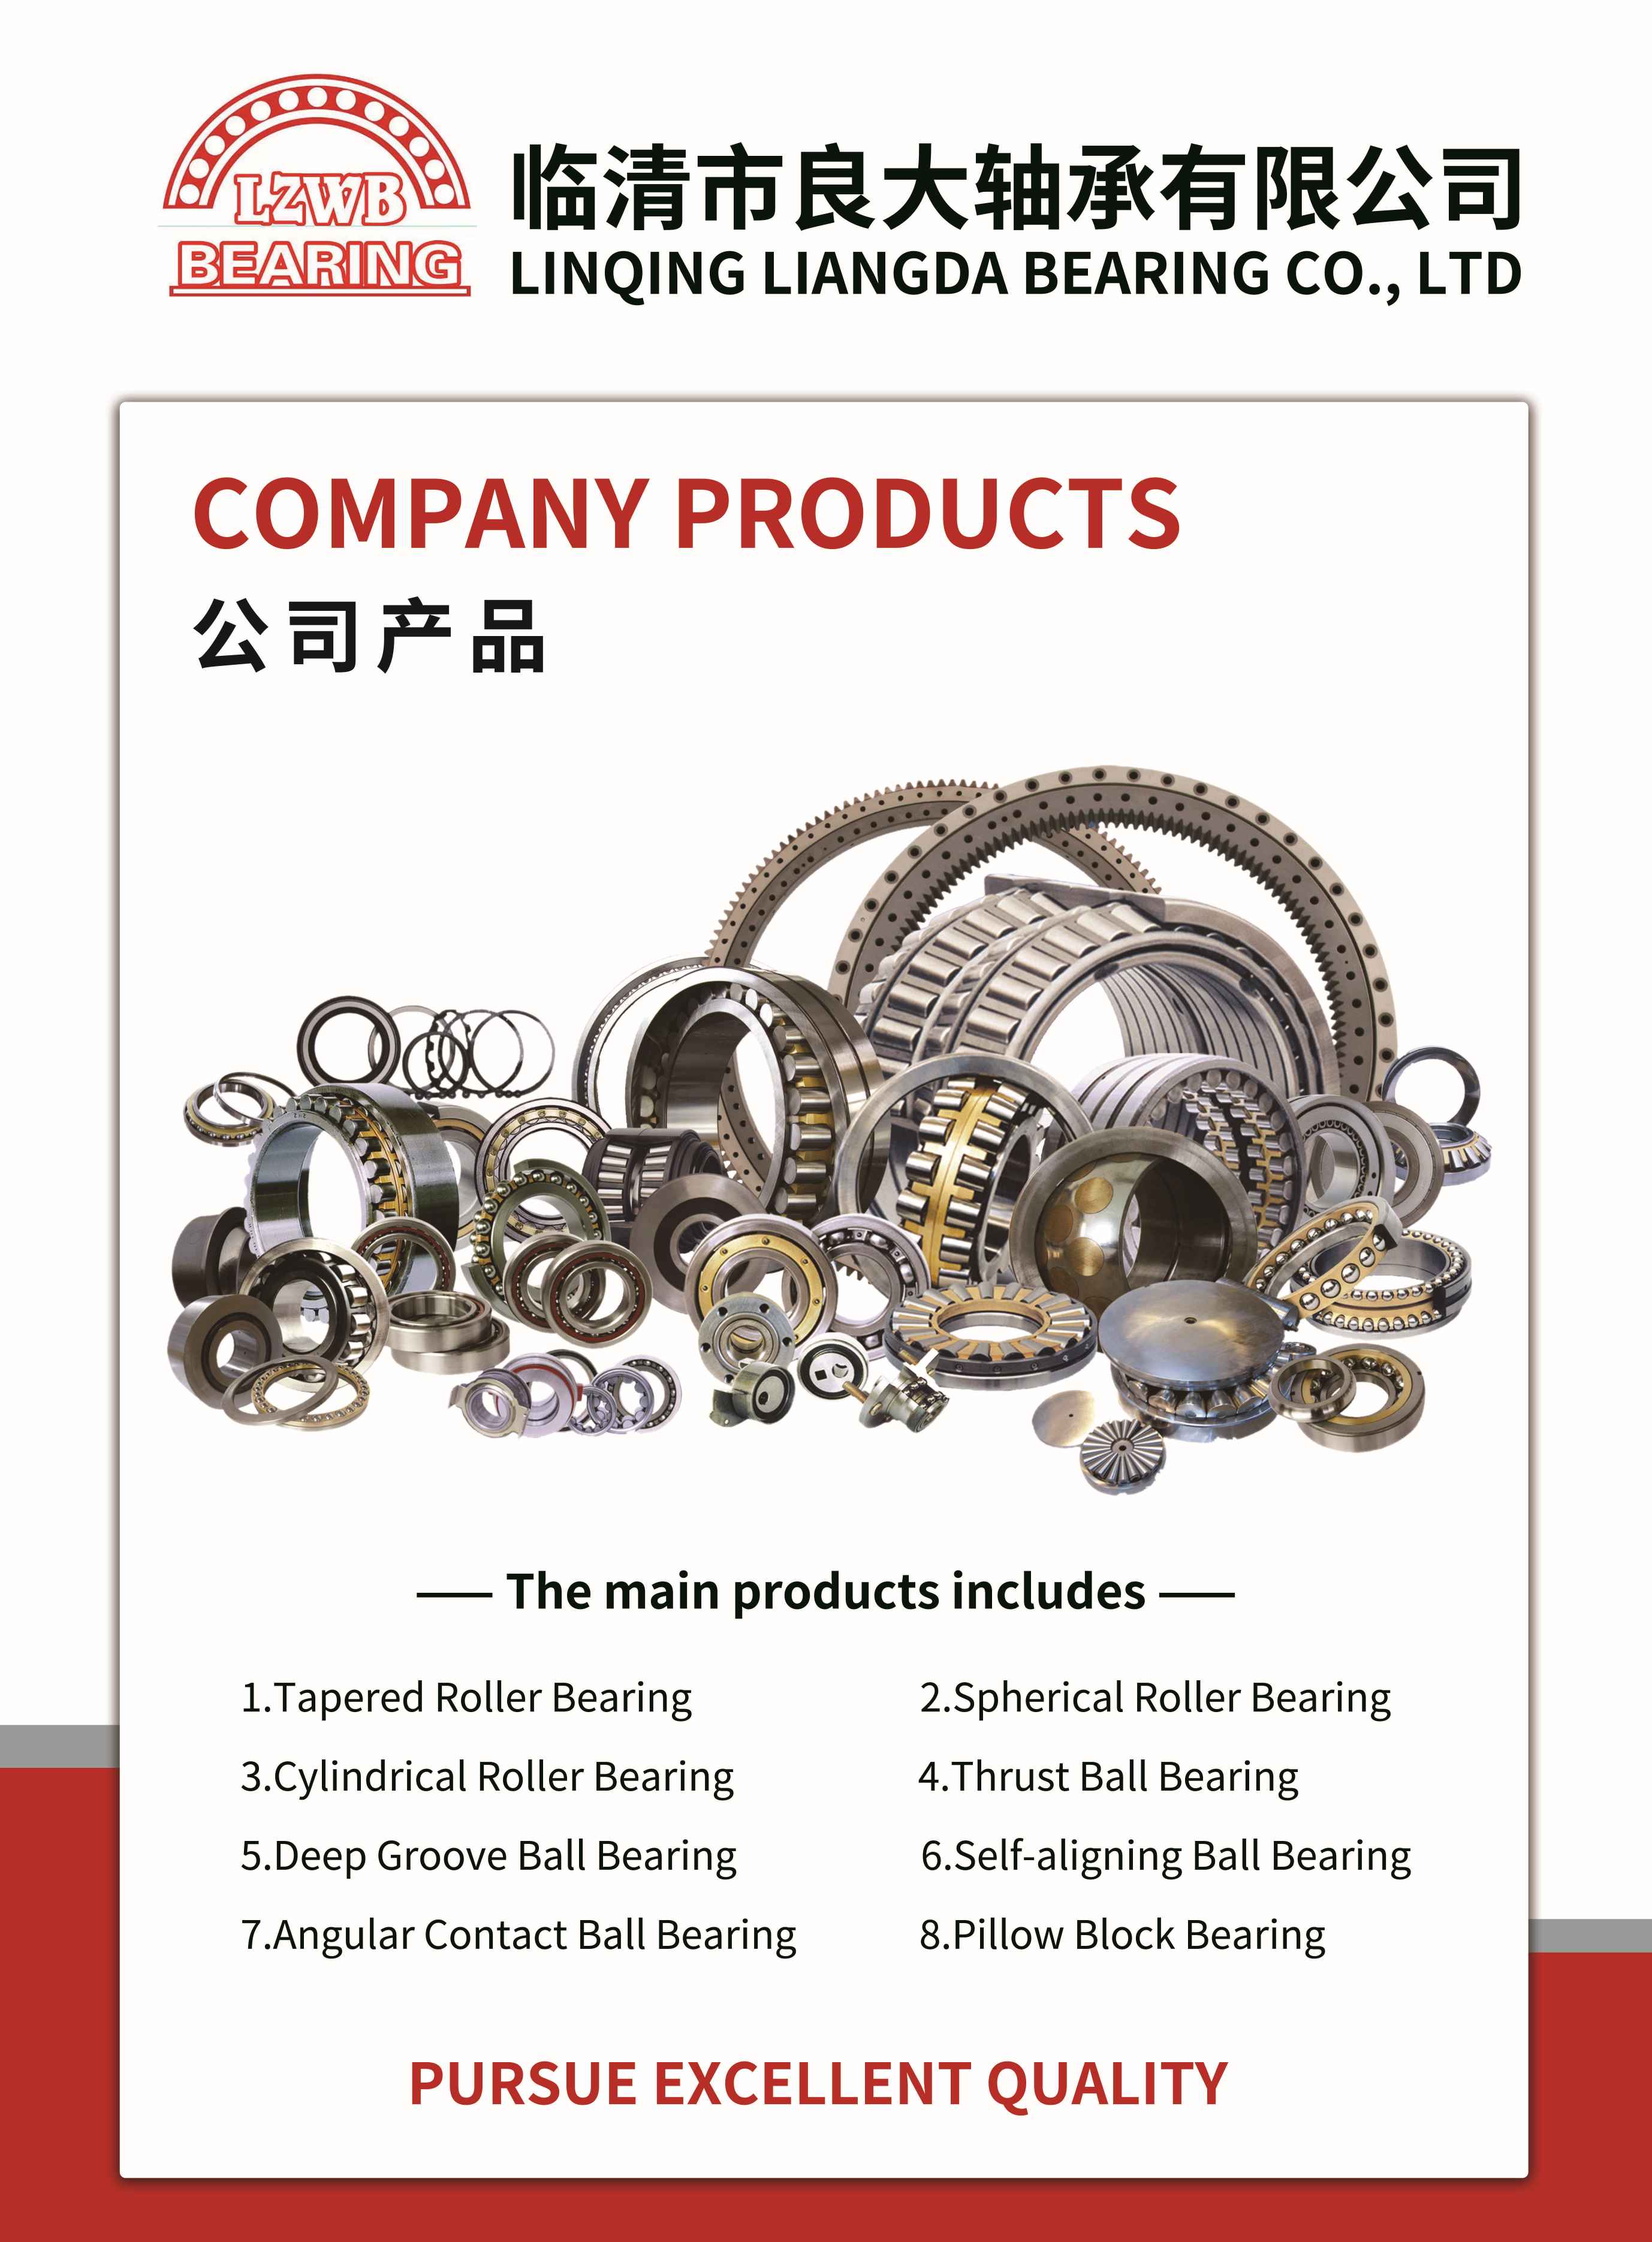 company products.jpg